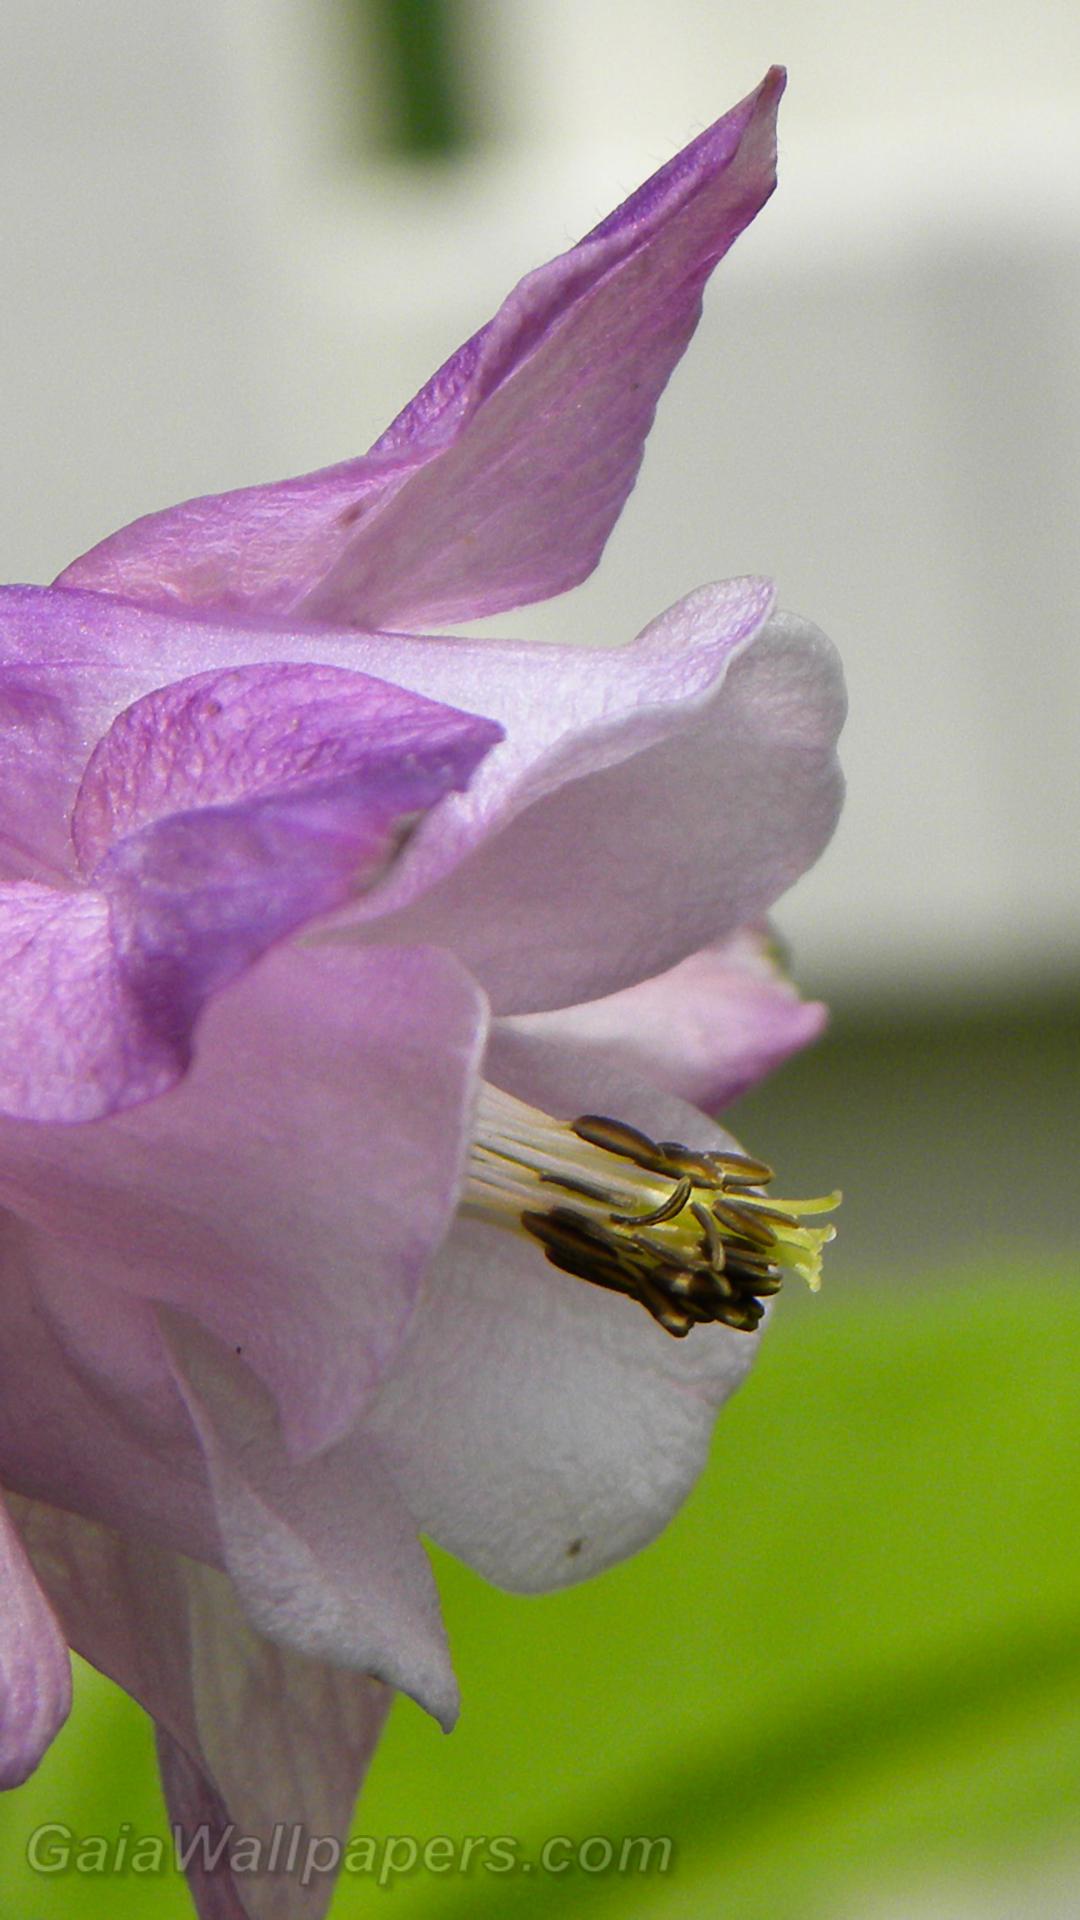 Little insect walking on a flower - Free desktop wallpapers